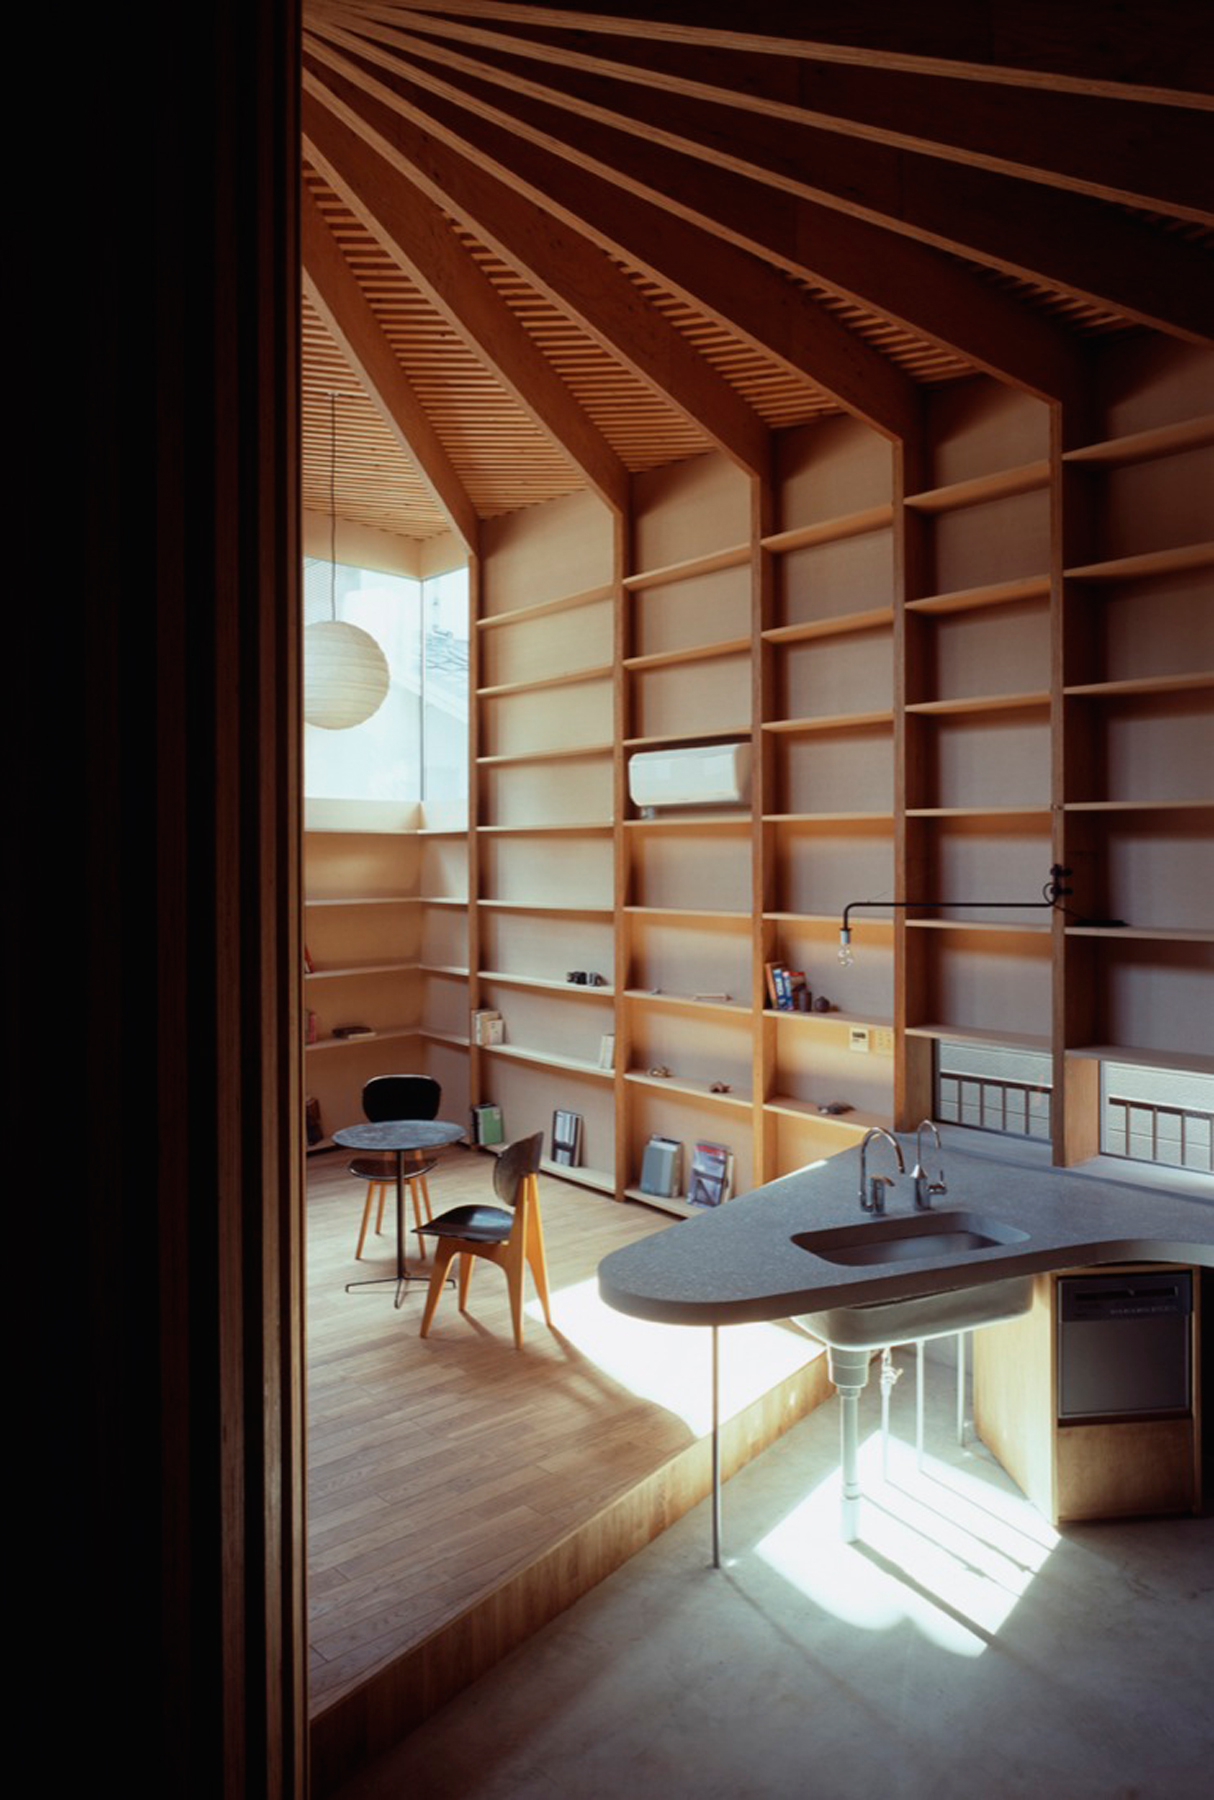 Tree House / Mount Fuji Architects Studio (13)